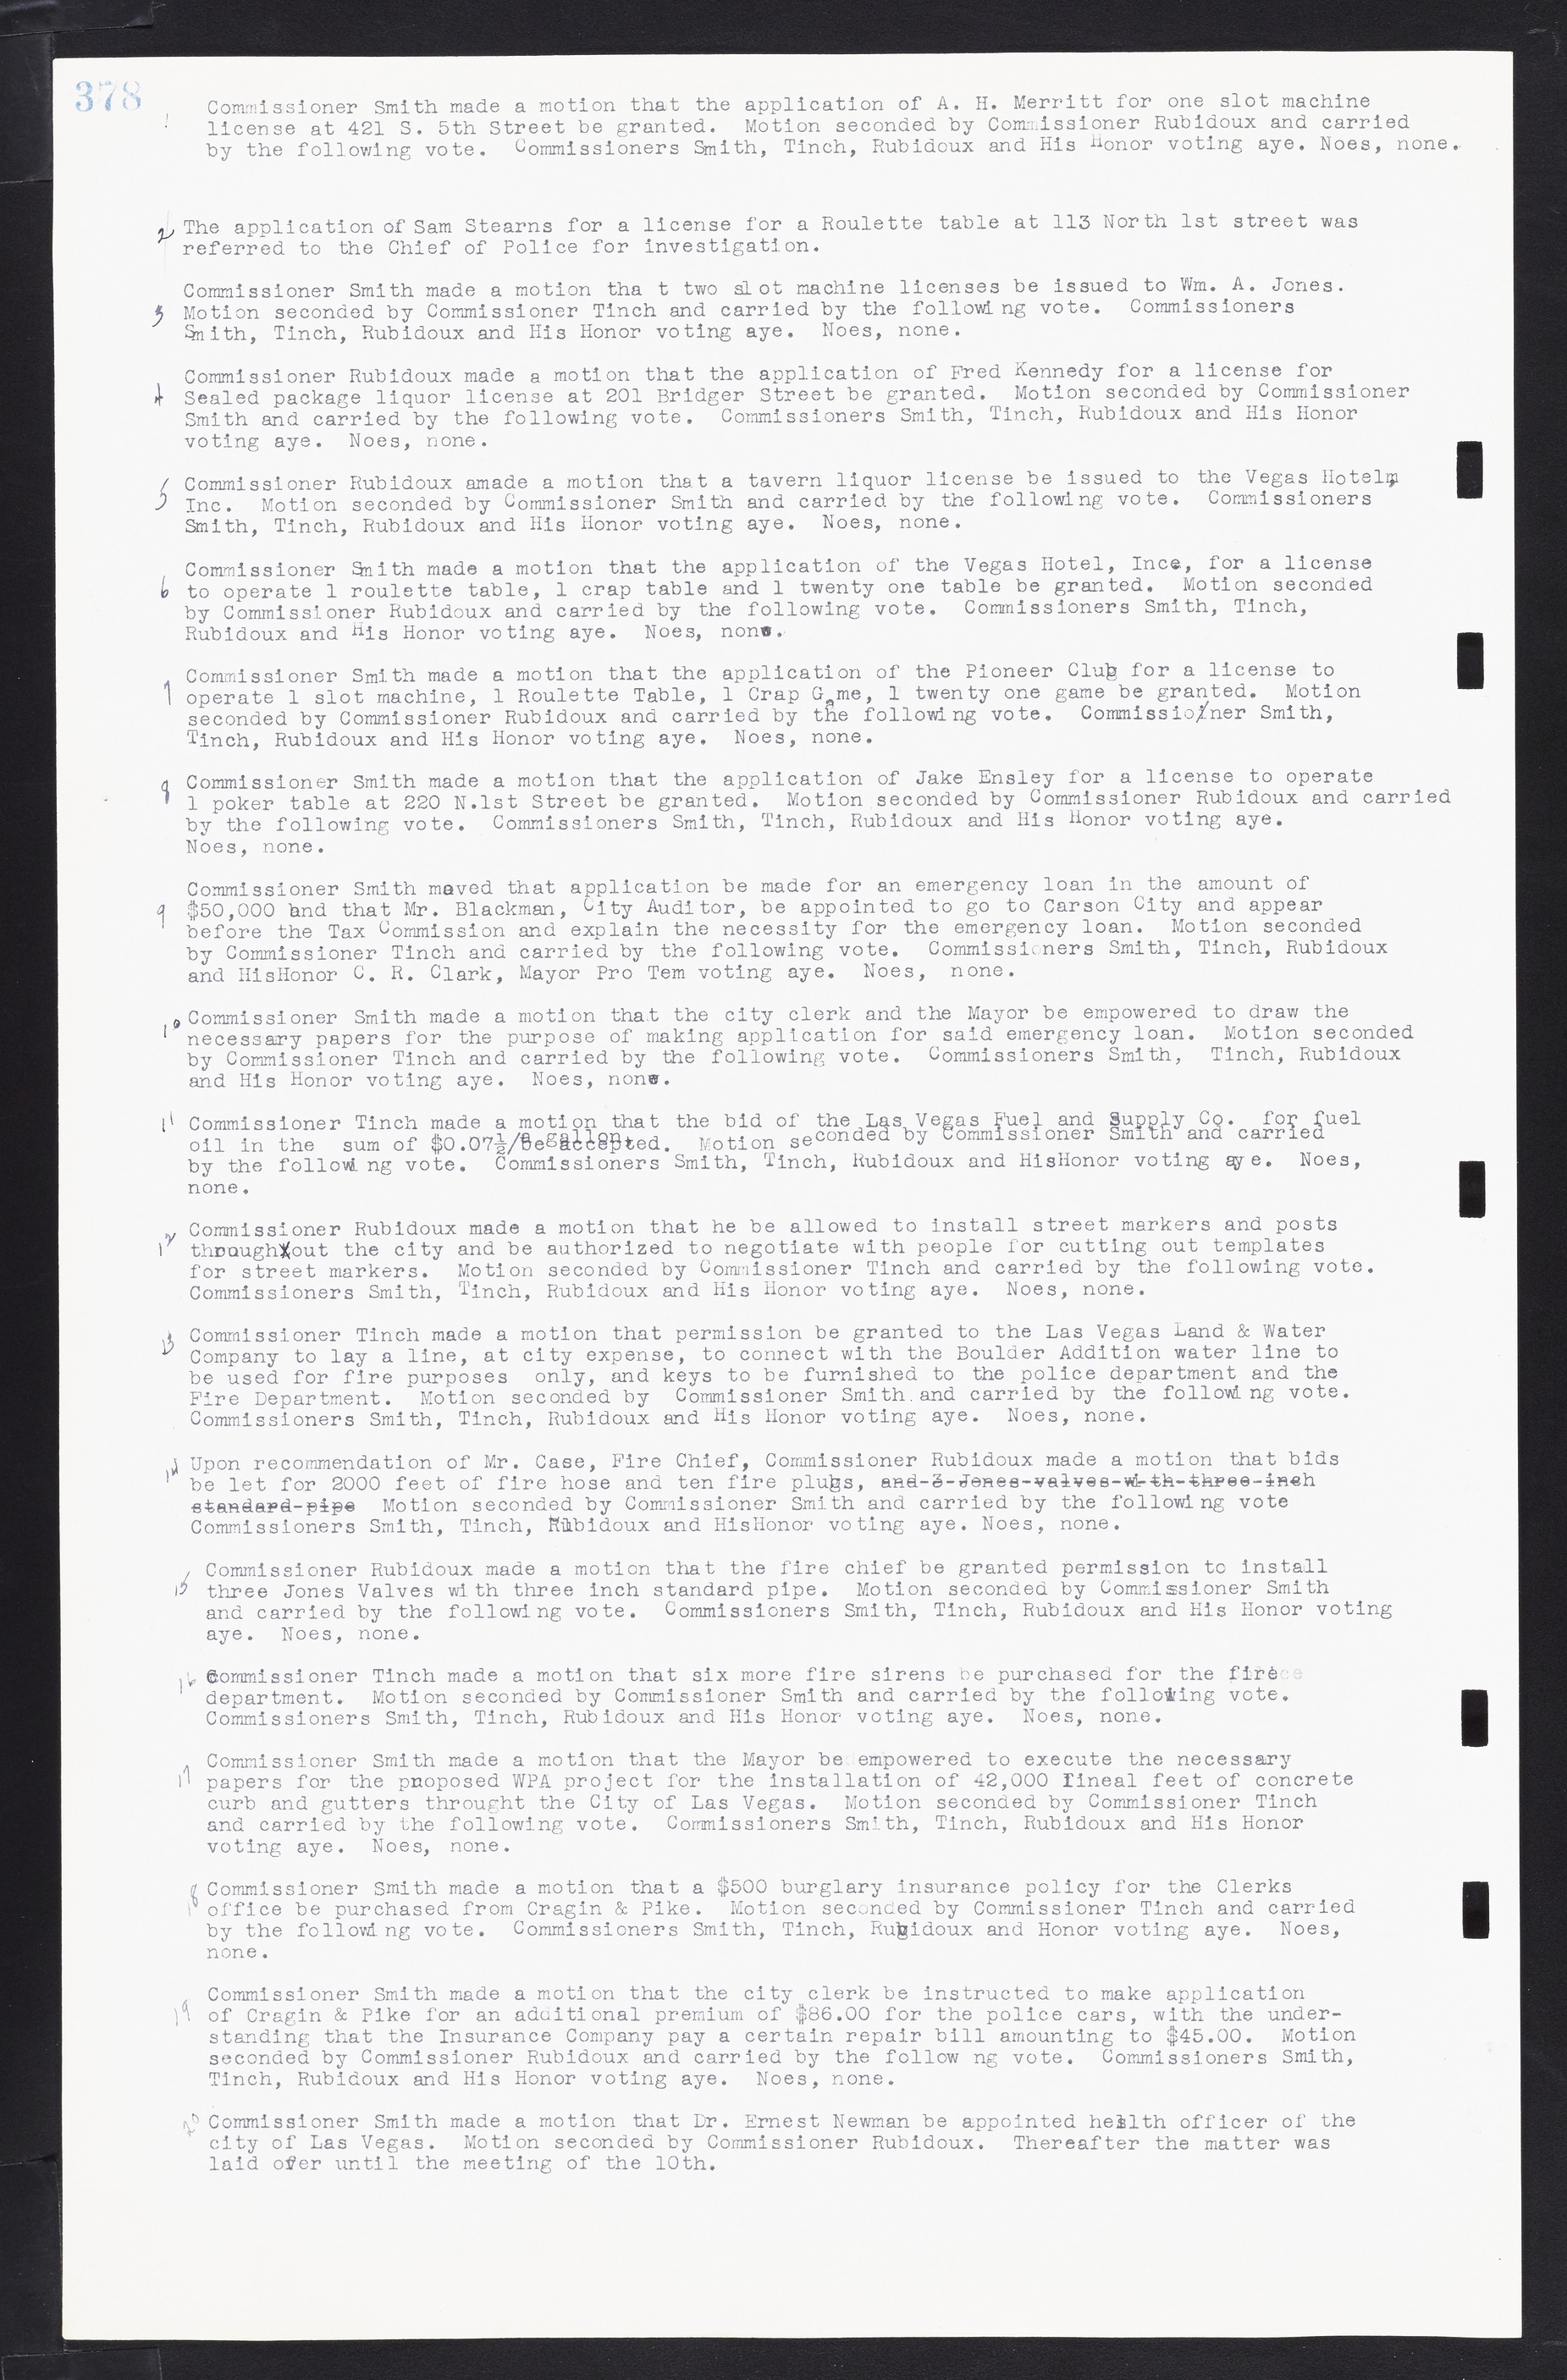 Las Vegas City Commission Minutes, February 17, 1937 to August 4, 1942, lvc000004-404